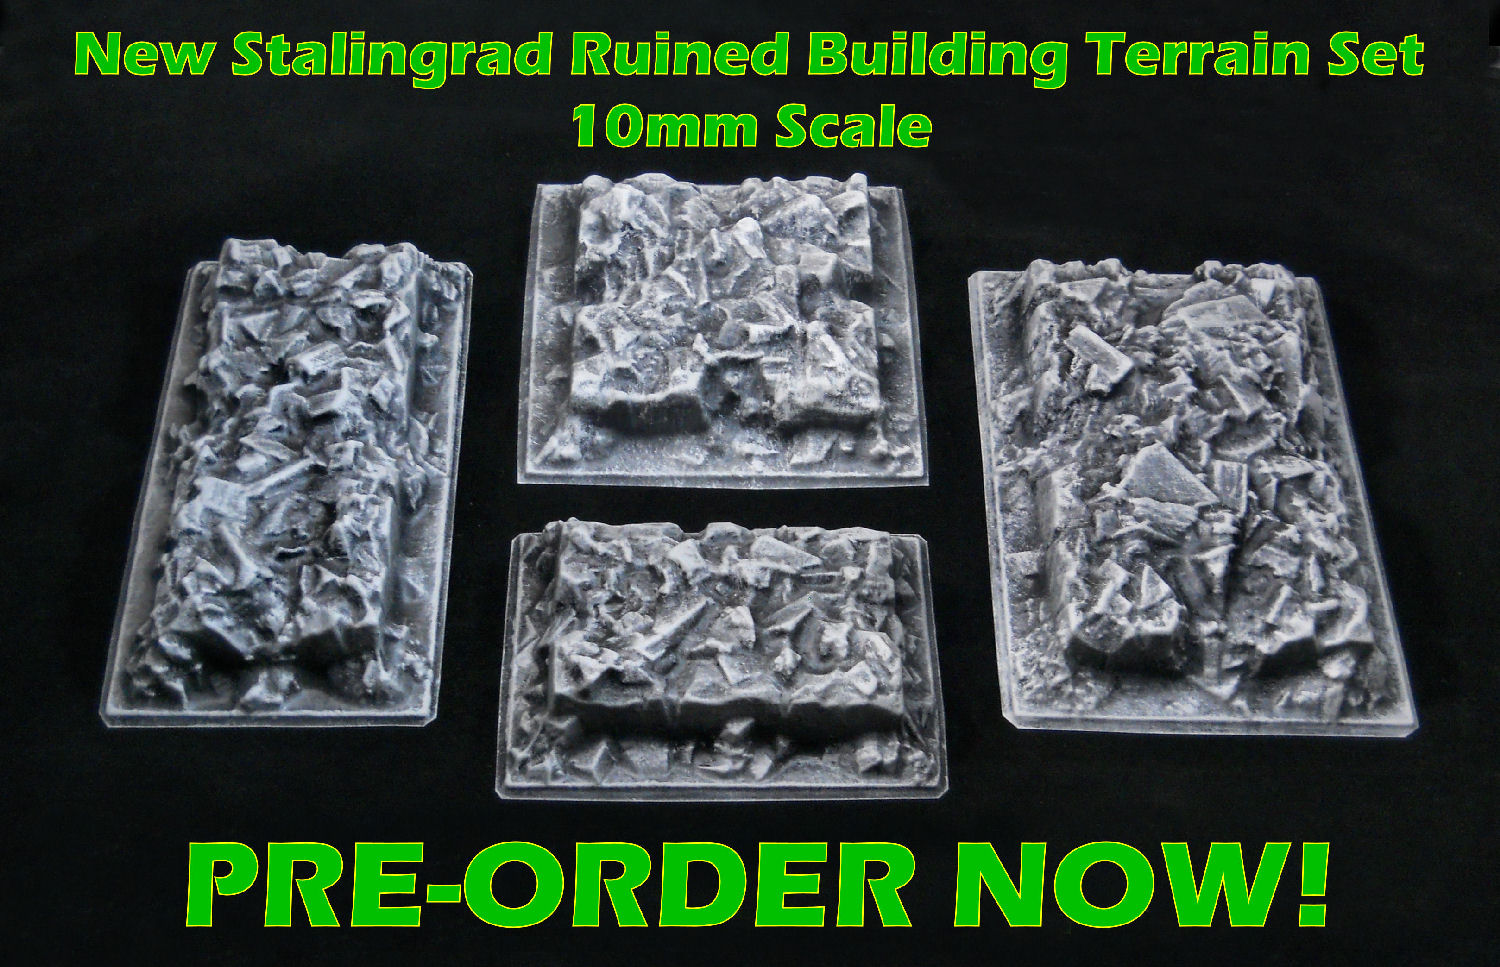 New Stalingrad Terrain Set Pre-Orders!